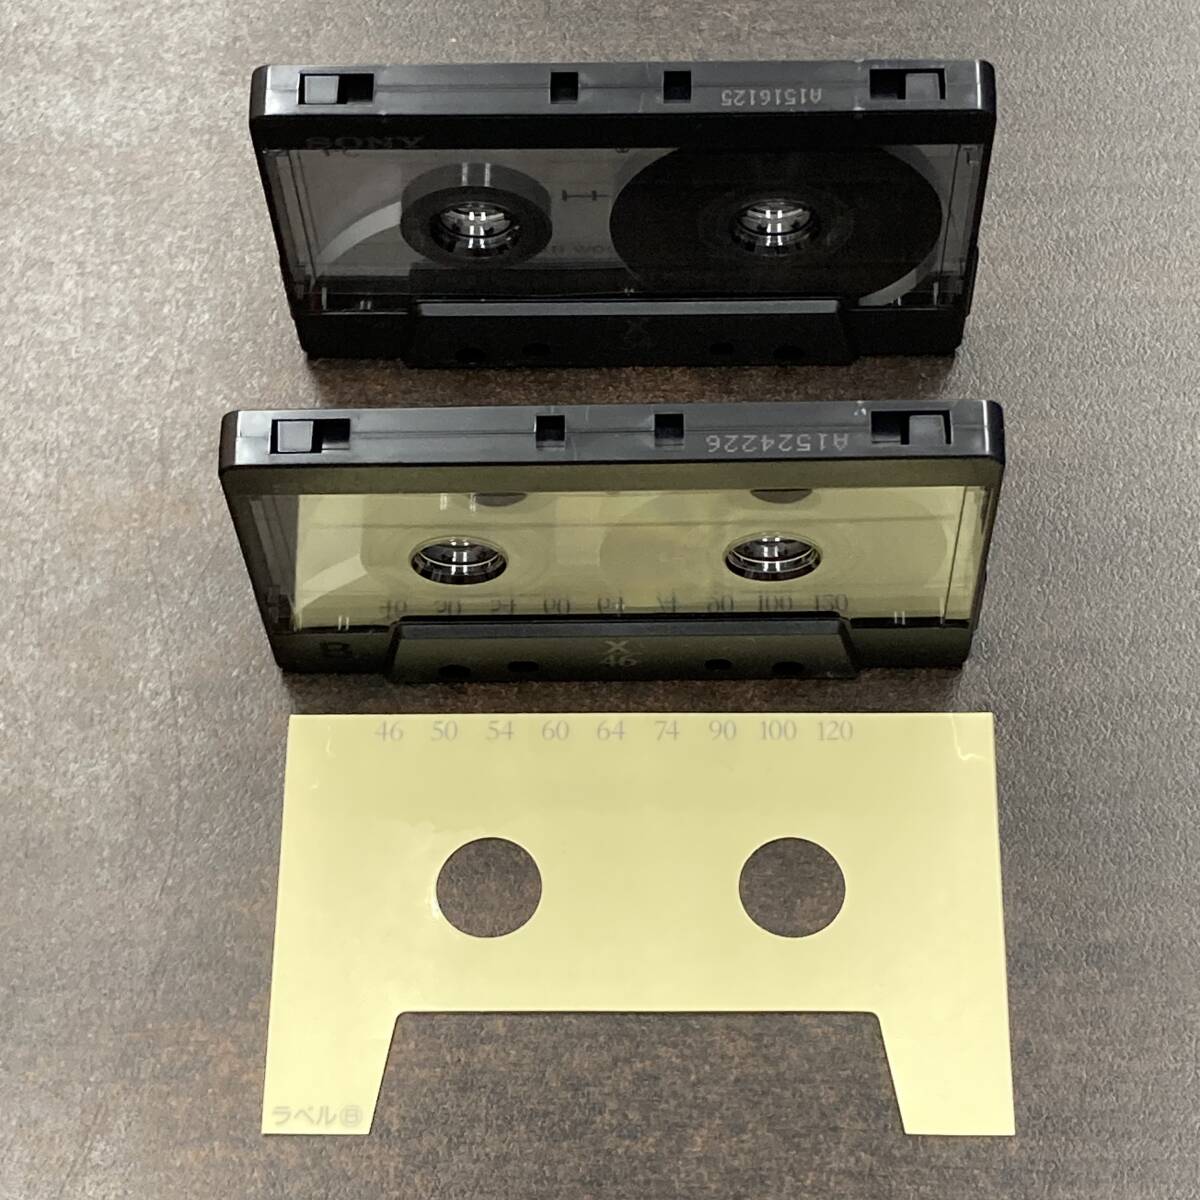 1994BT Sony XIV 46 54 minute metal 2 ps cassette tape /Two SONY XIV 46 54 Type IV Metal Position Audio Cassette